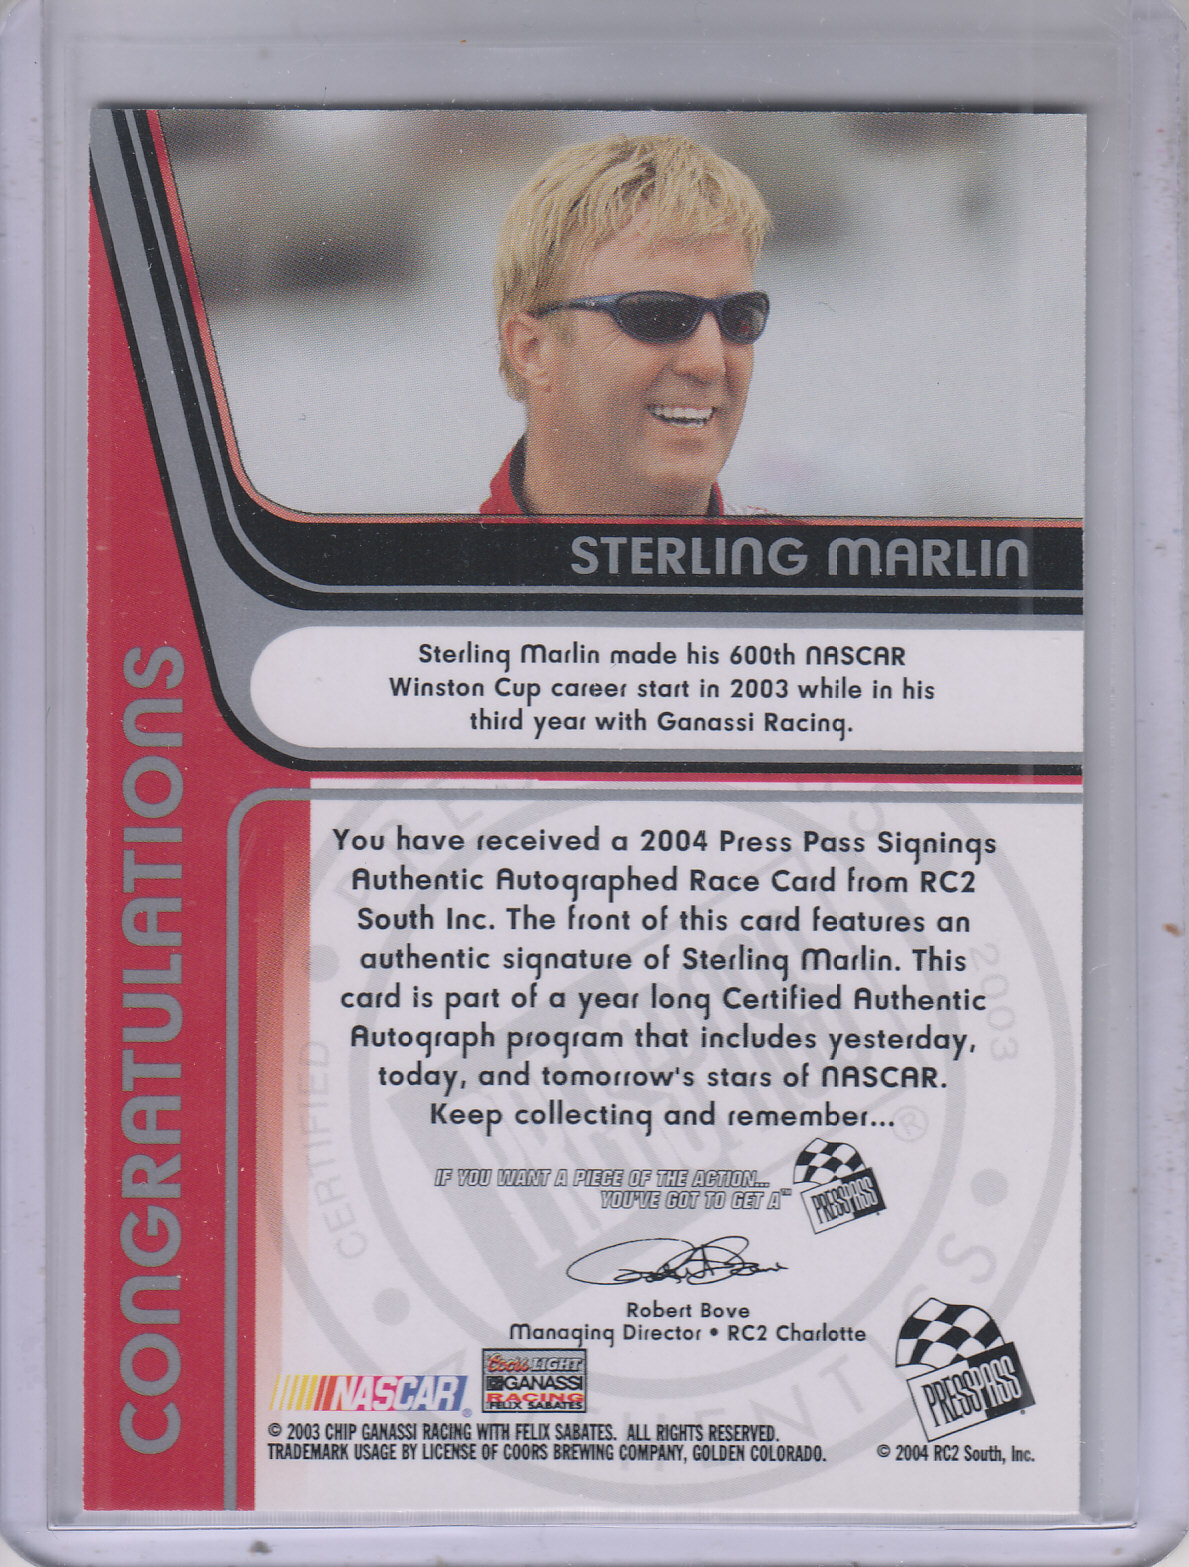 2004 Press Pass Signings #40 Sterling Marlin O/P/S/T/V back image